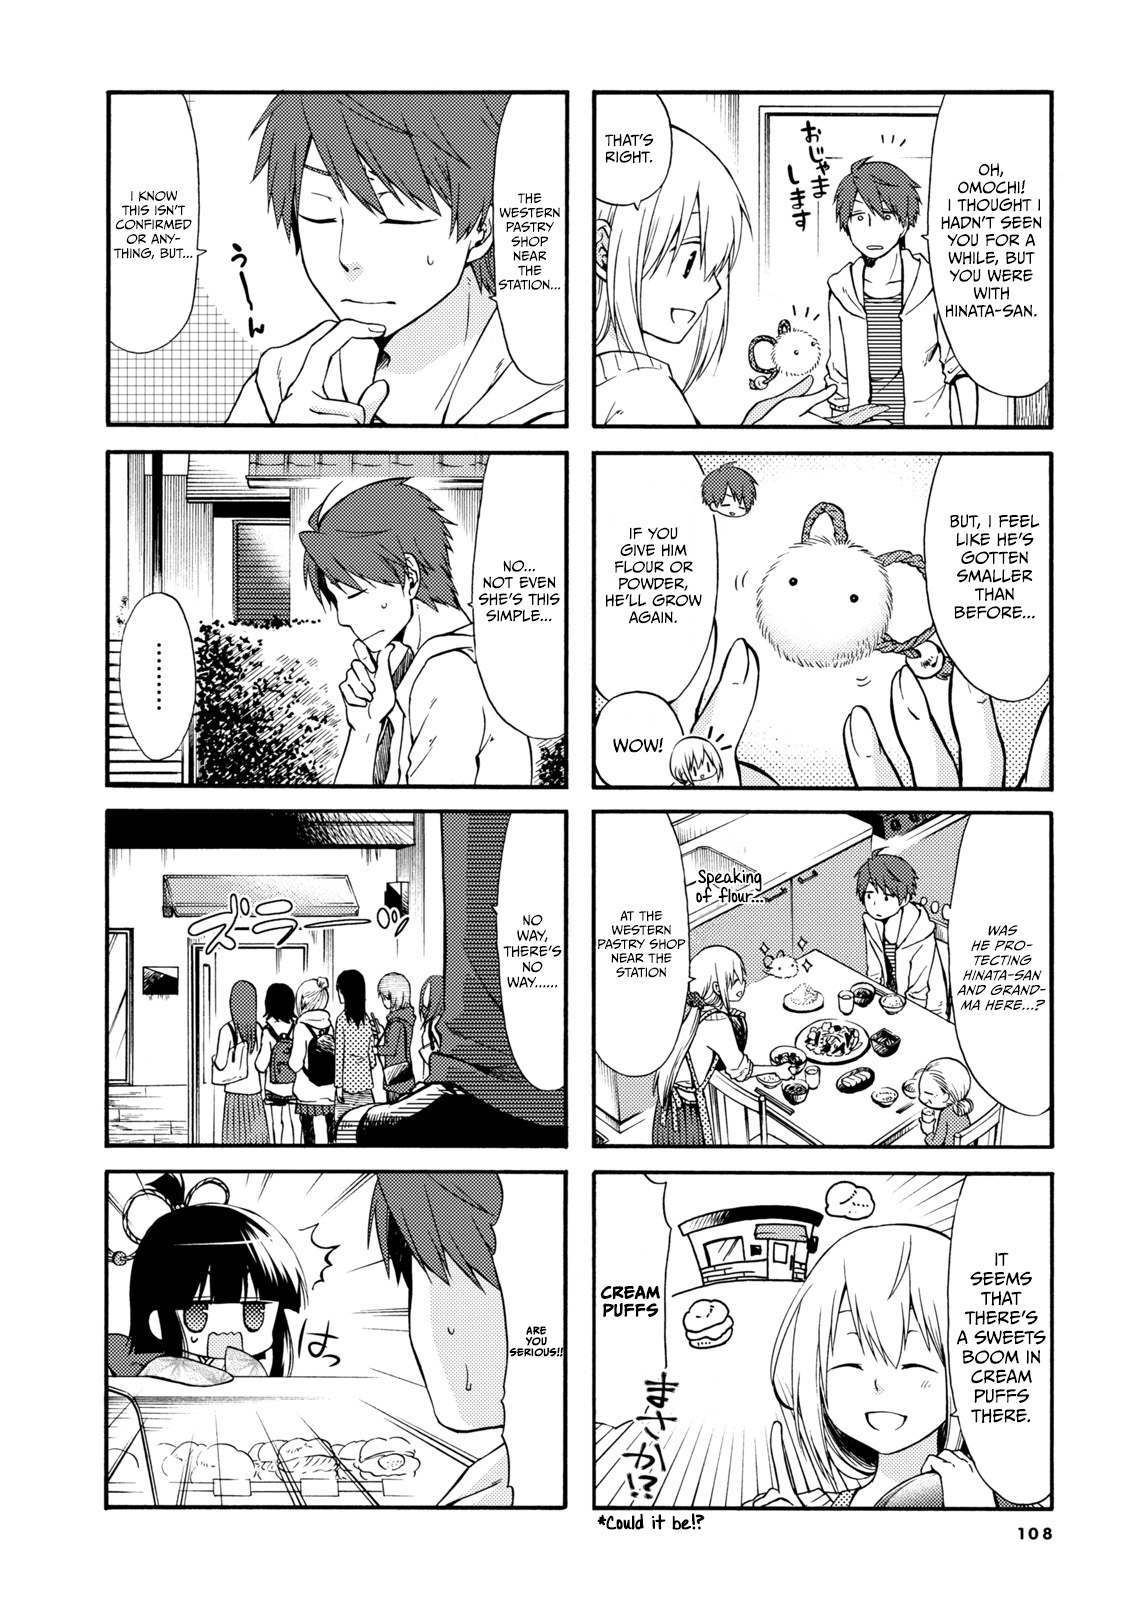 A Zashikiwarashi Lives In That Apartment - Page 2